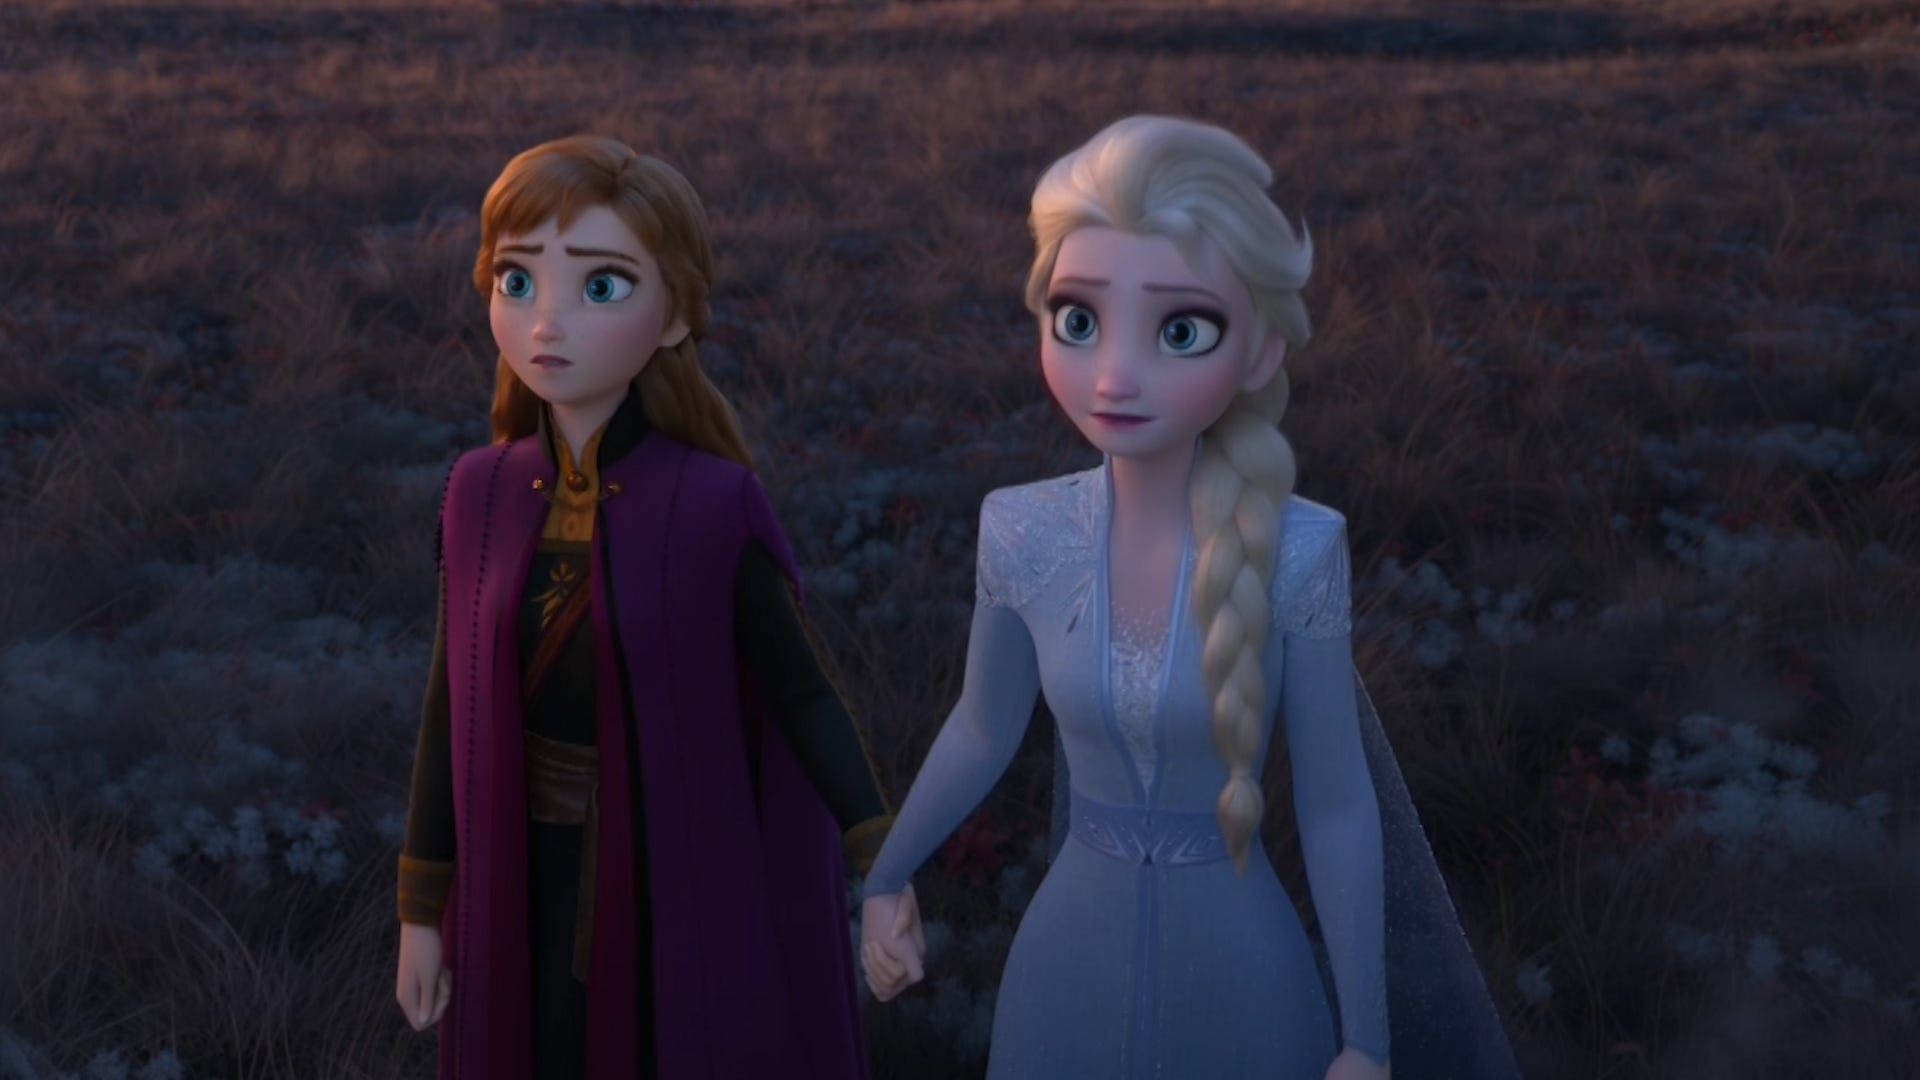 Queen Elsa and Princess Anna embark on an epic journey in Disney's Frozen 2 Wallpaper